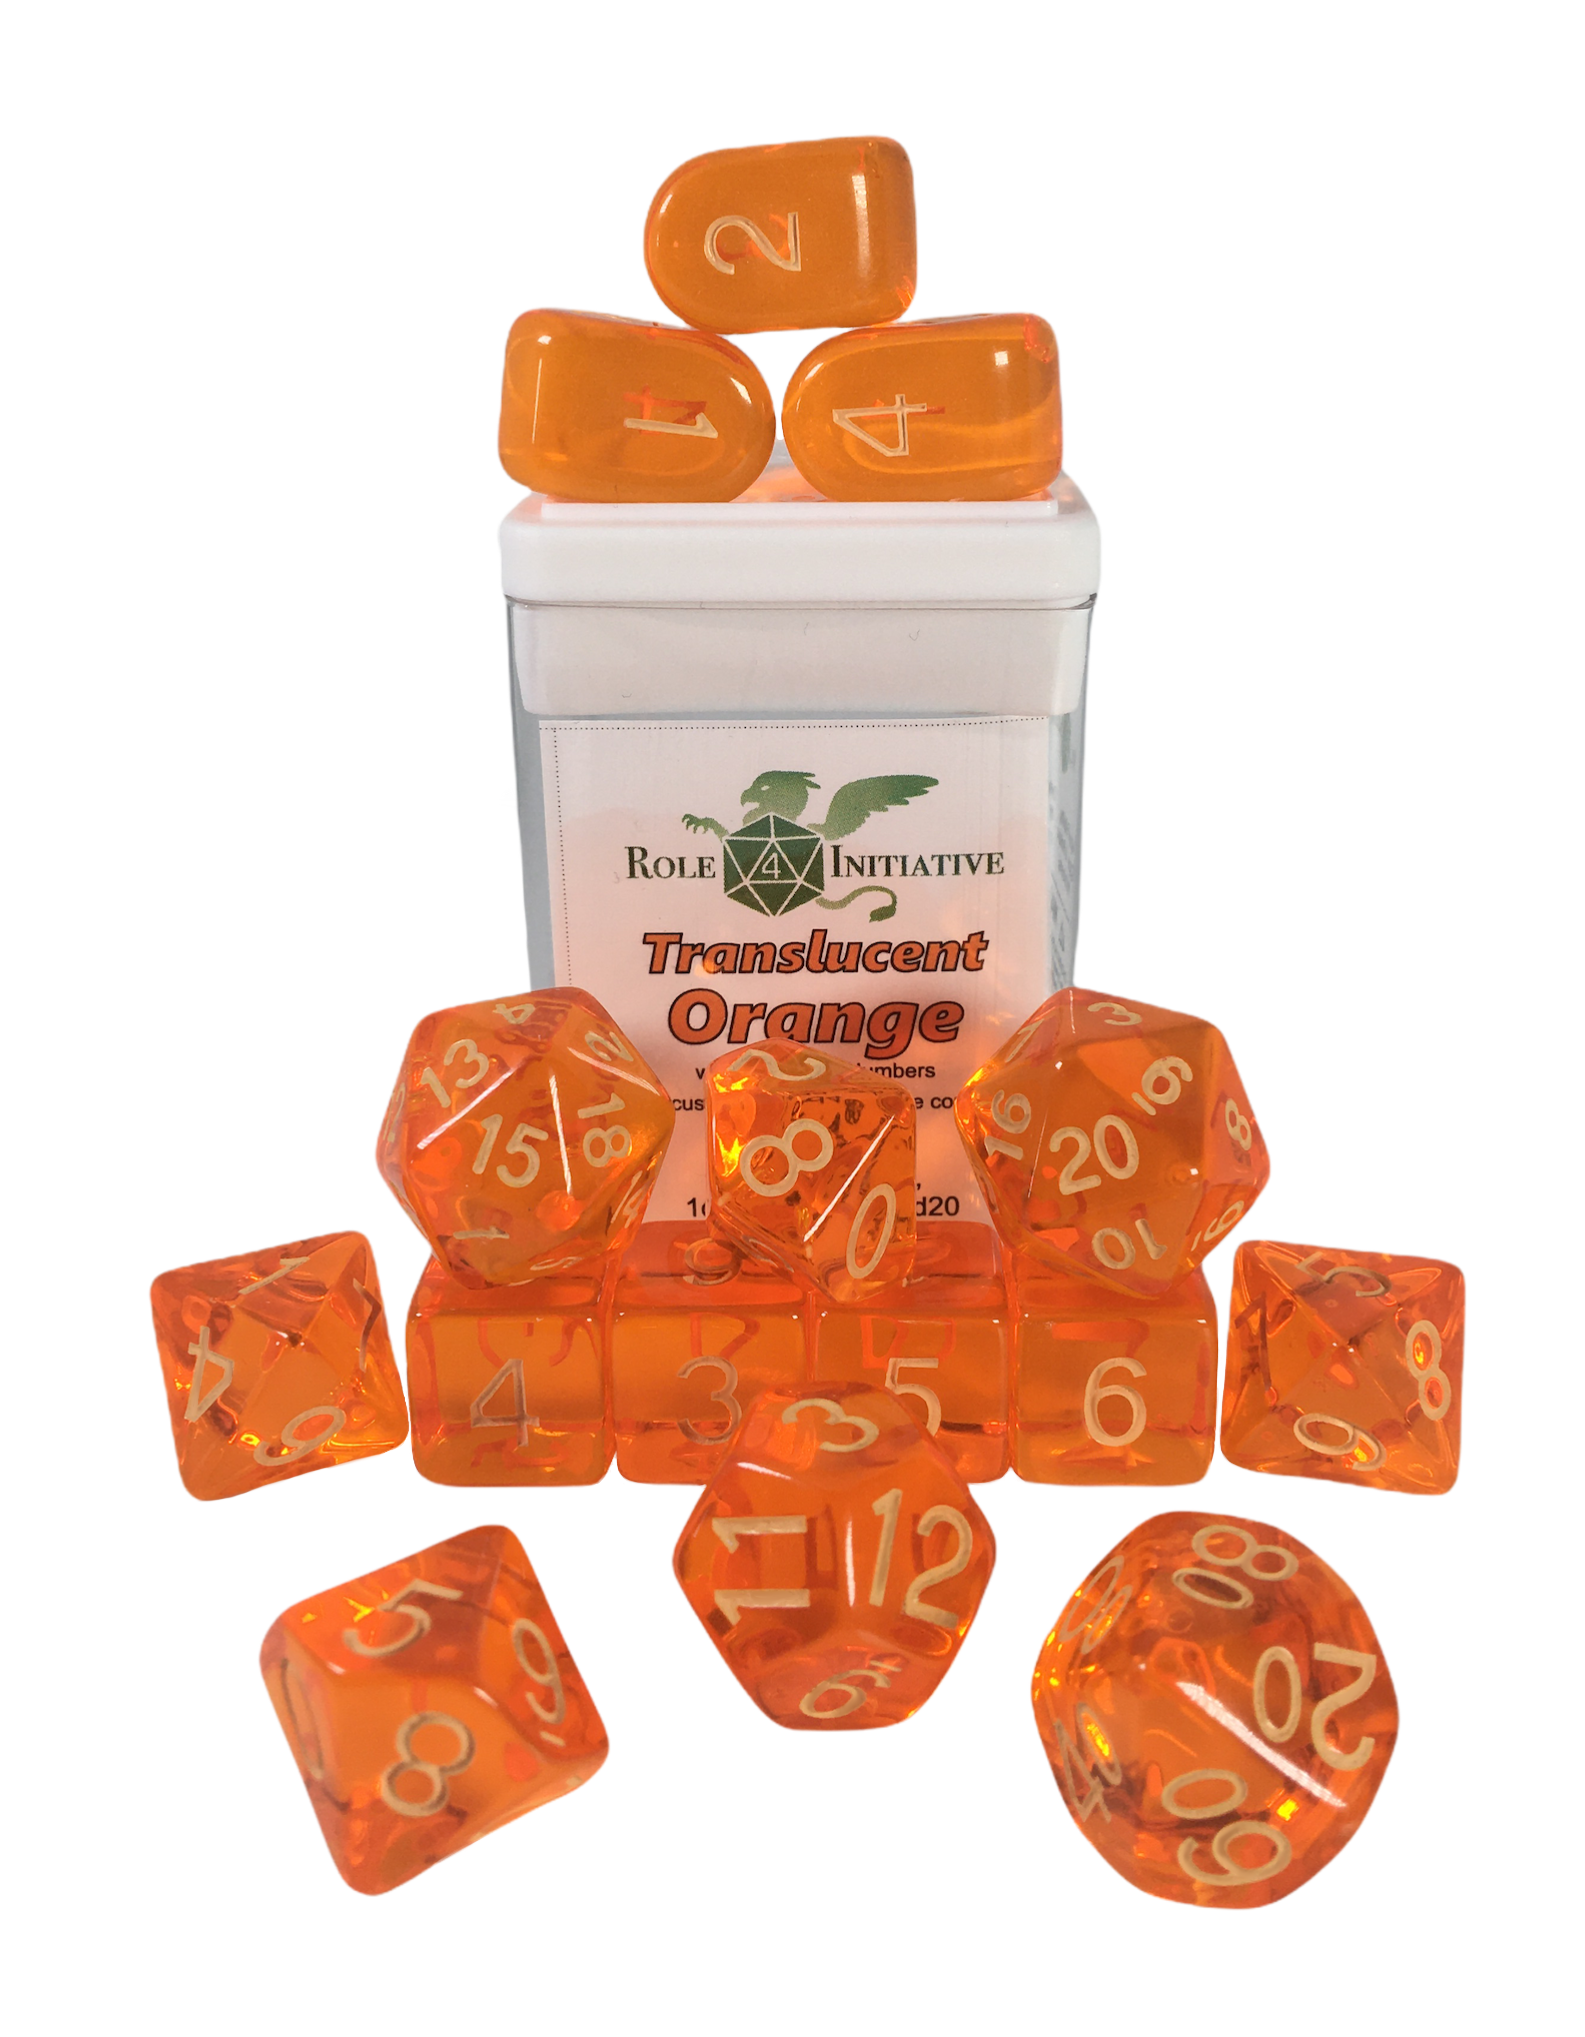 Role 4 Initiative: Polyhedral 15 Dice Set: Translucent Orange And Light Orange (Arch D4)  